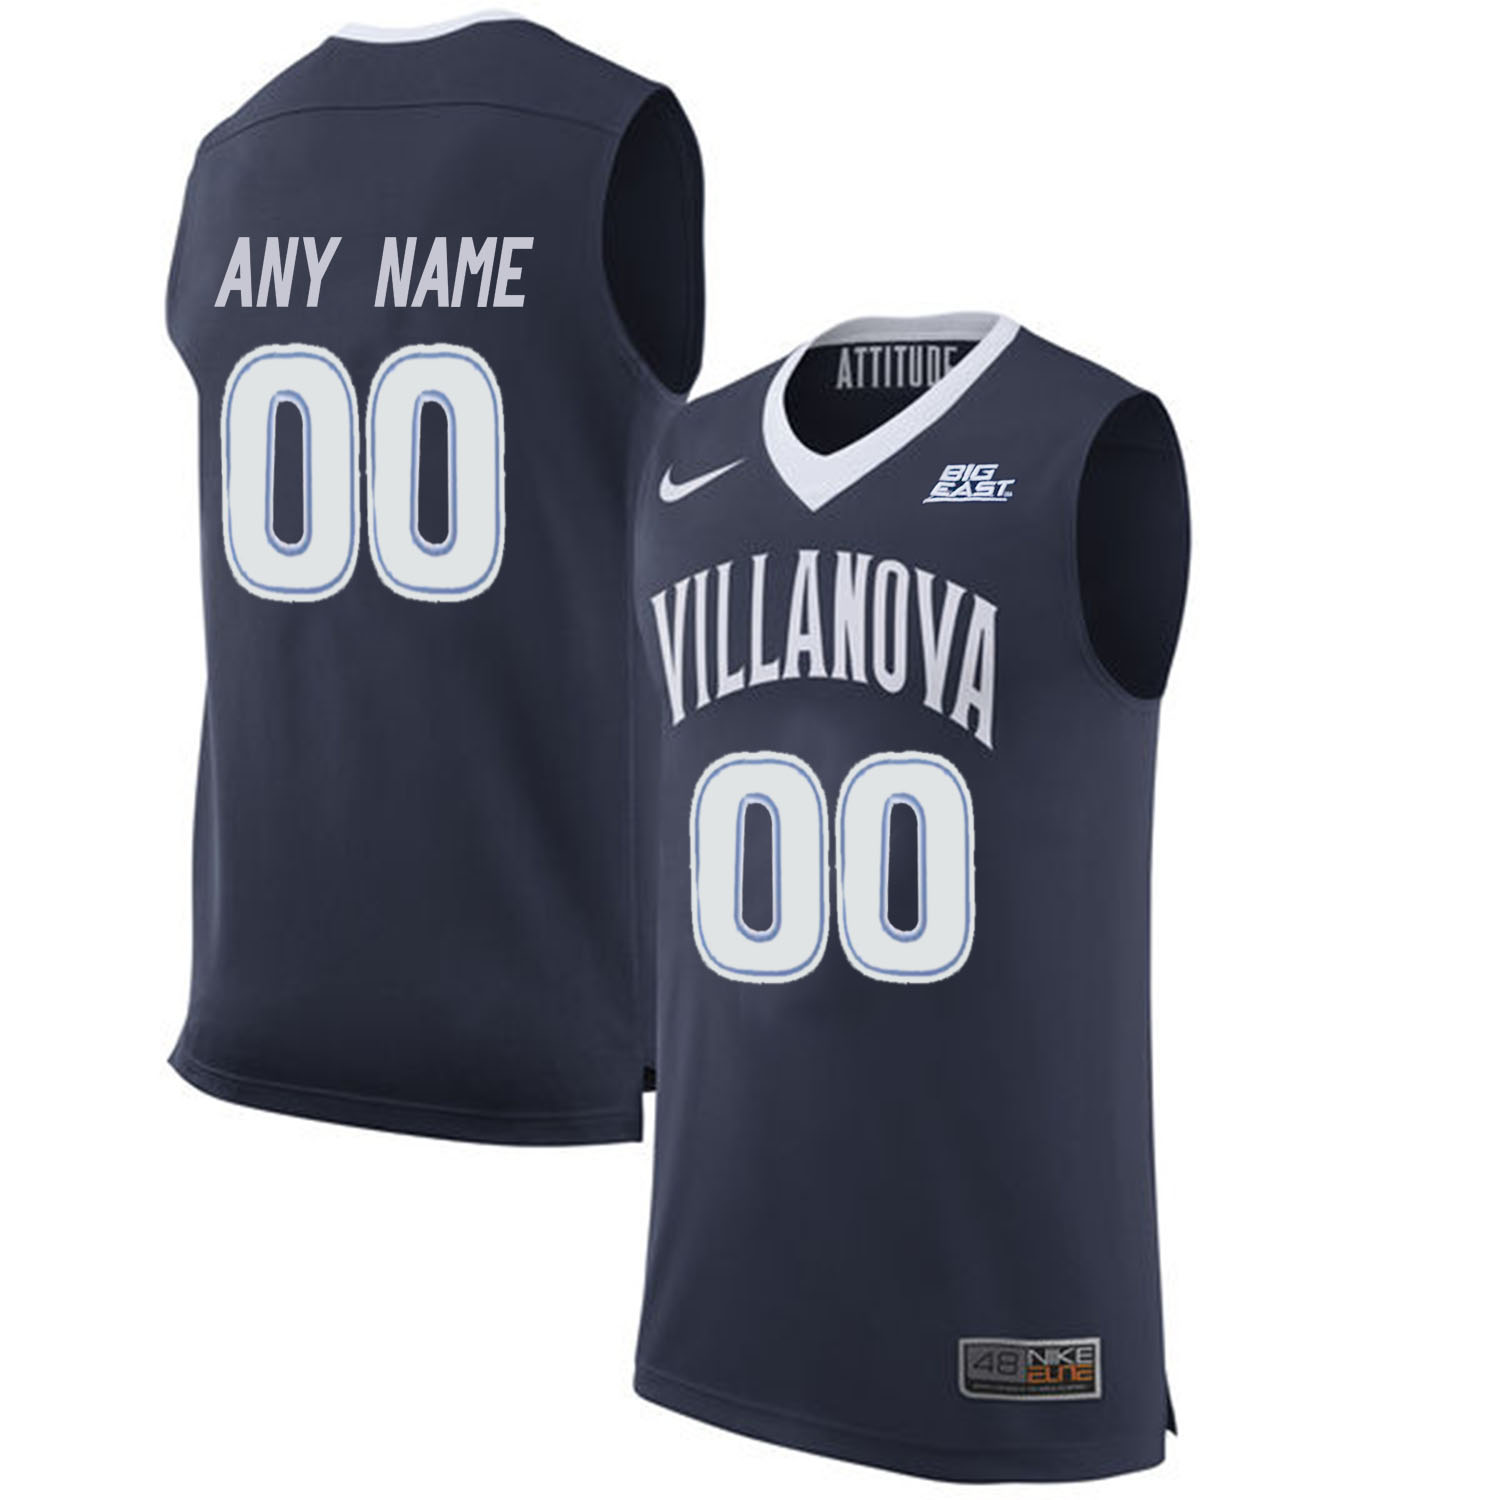 Villanova Wildcats Navy Men's Customized College Basketball Elite Jersey